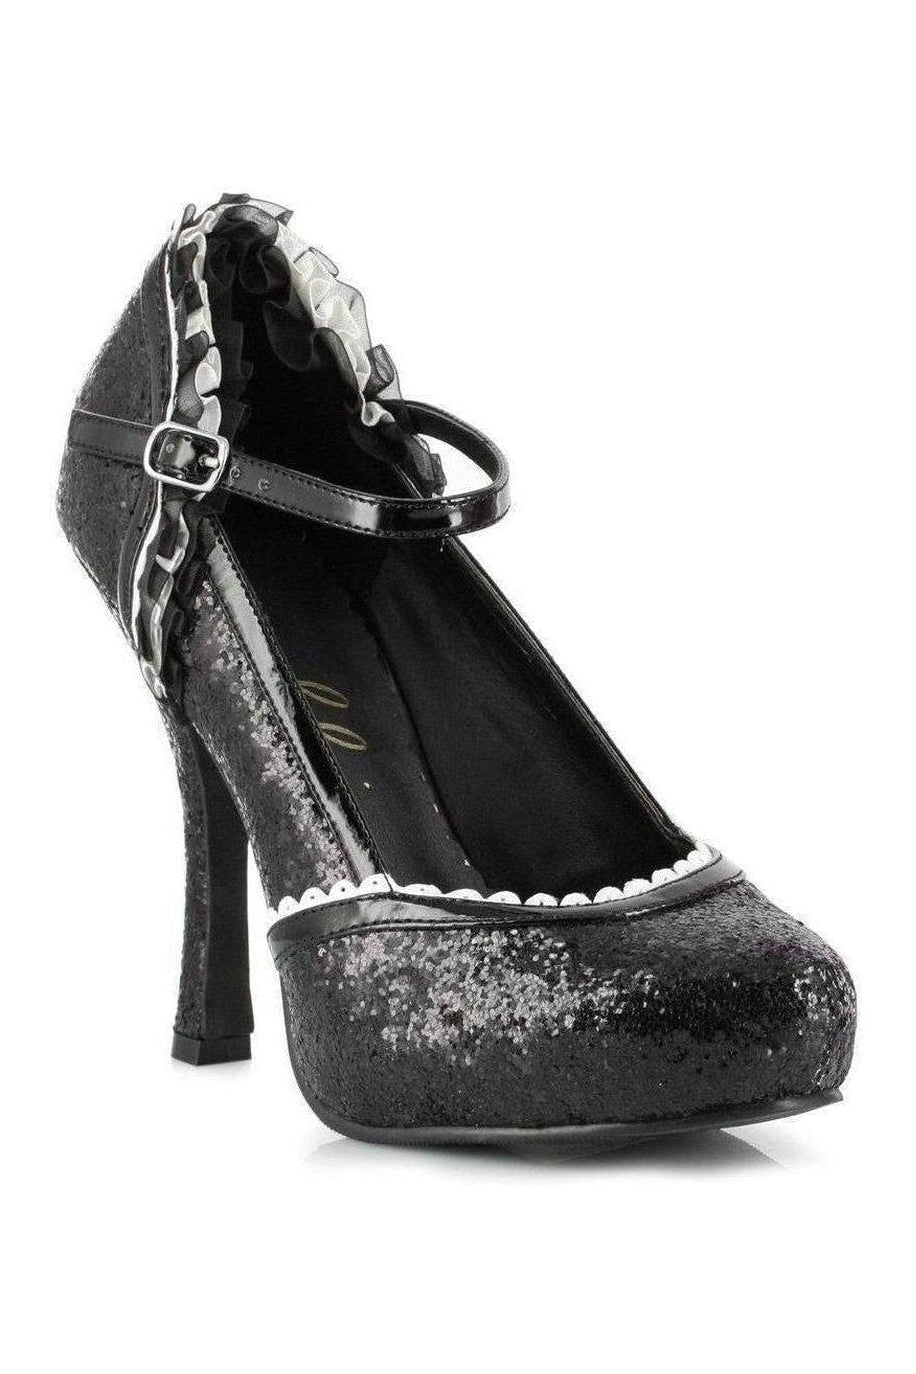 453-LACEY Costume Pump | Black Glitter-Ellie Shoes-SEXYSHOES.COM